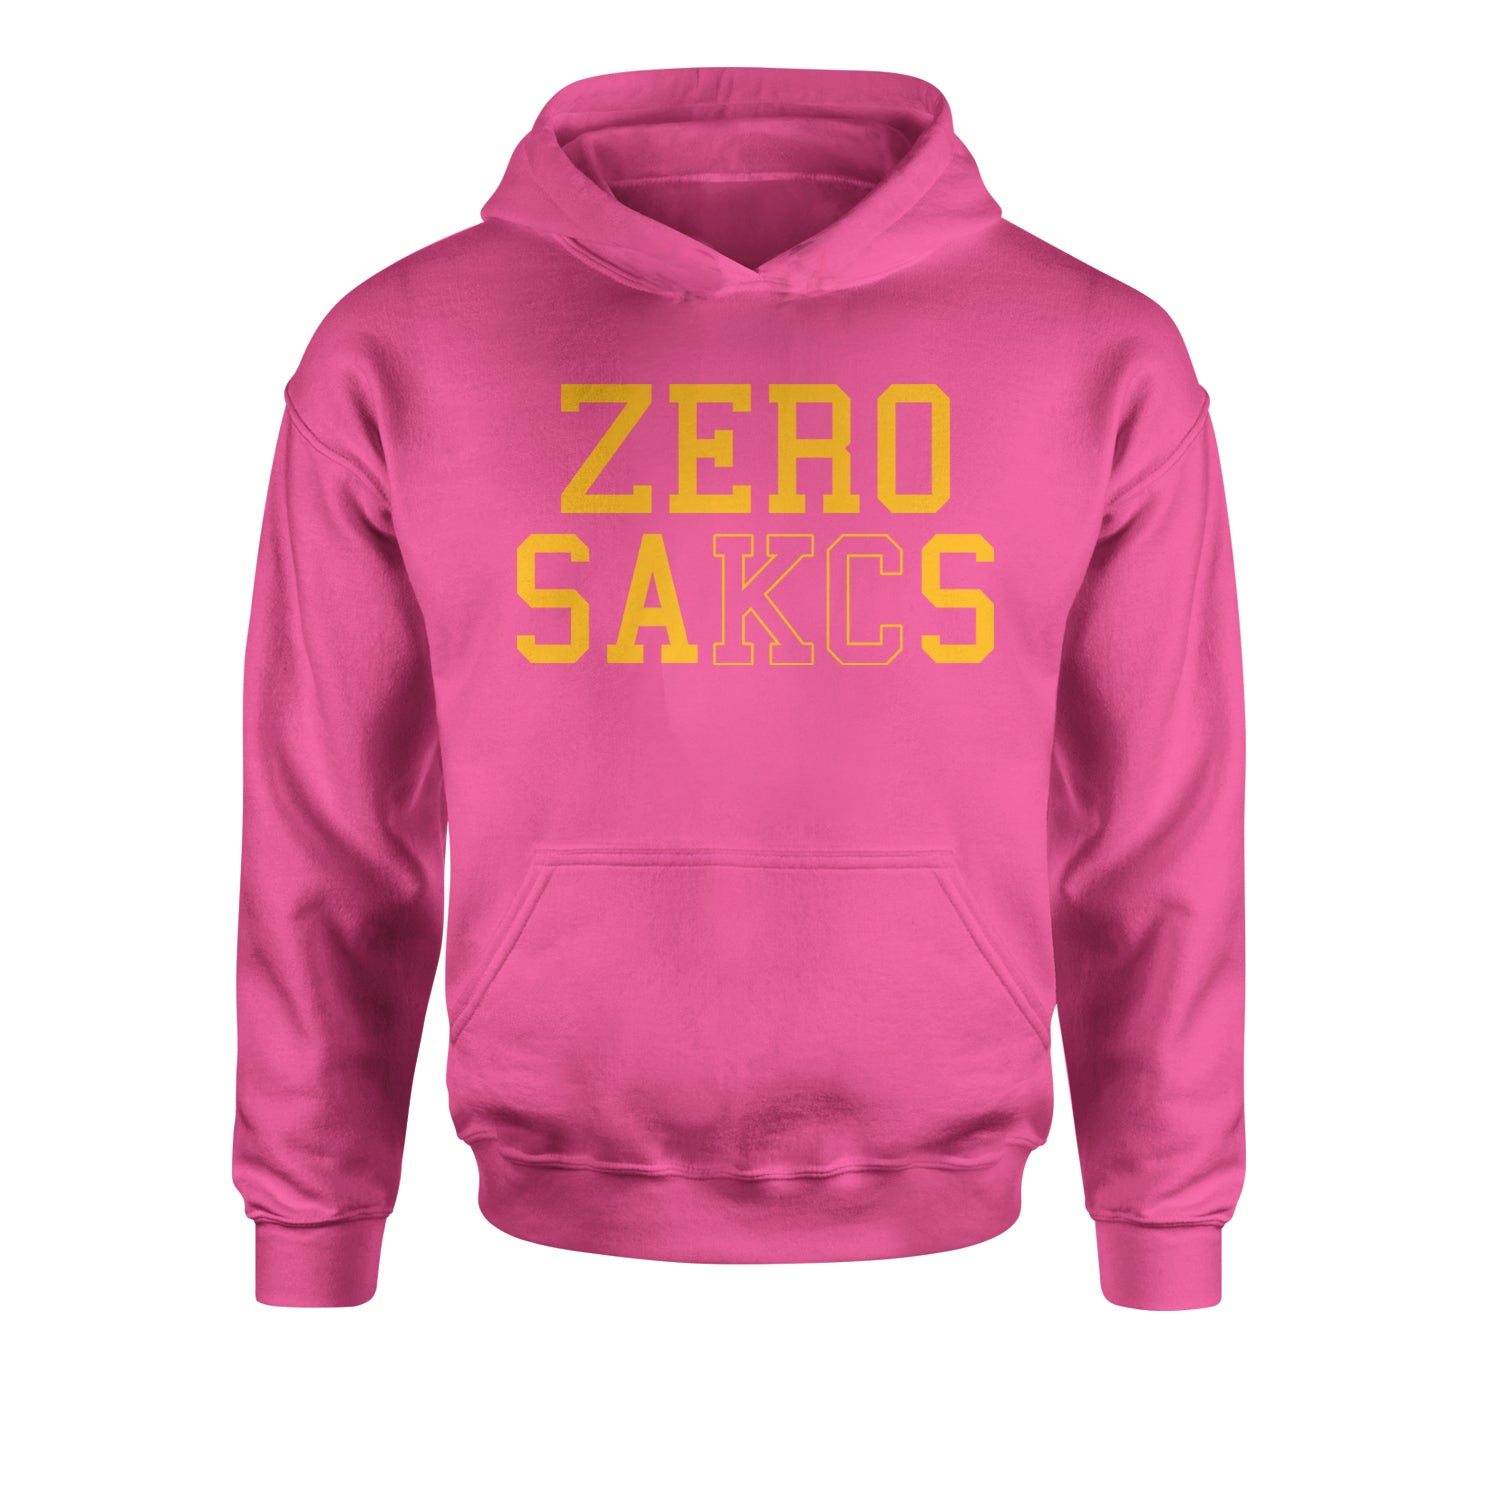 Zero Sacks Kansas City Youth-Sized Hoodie ball, brown, foot, football, kelc, orlando, patrick, sacks, sakcs by Expression Tees